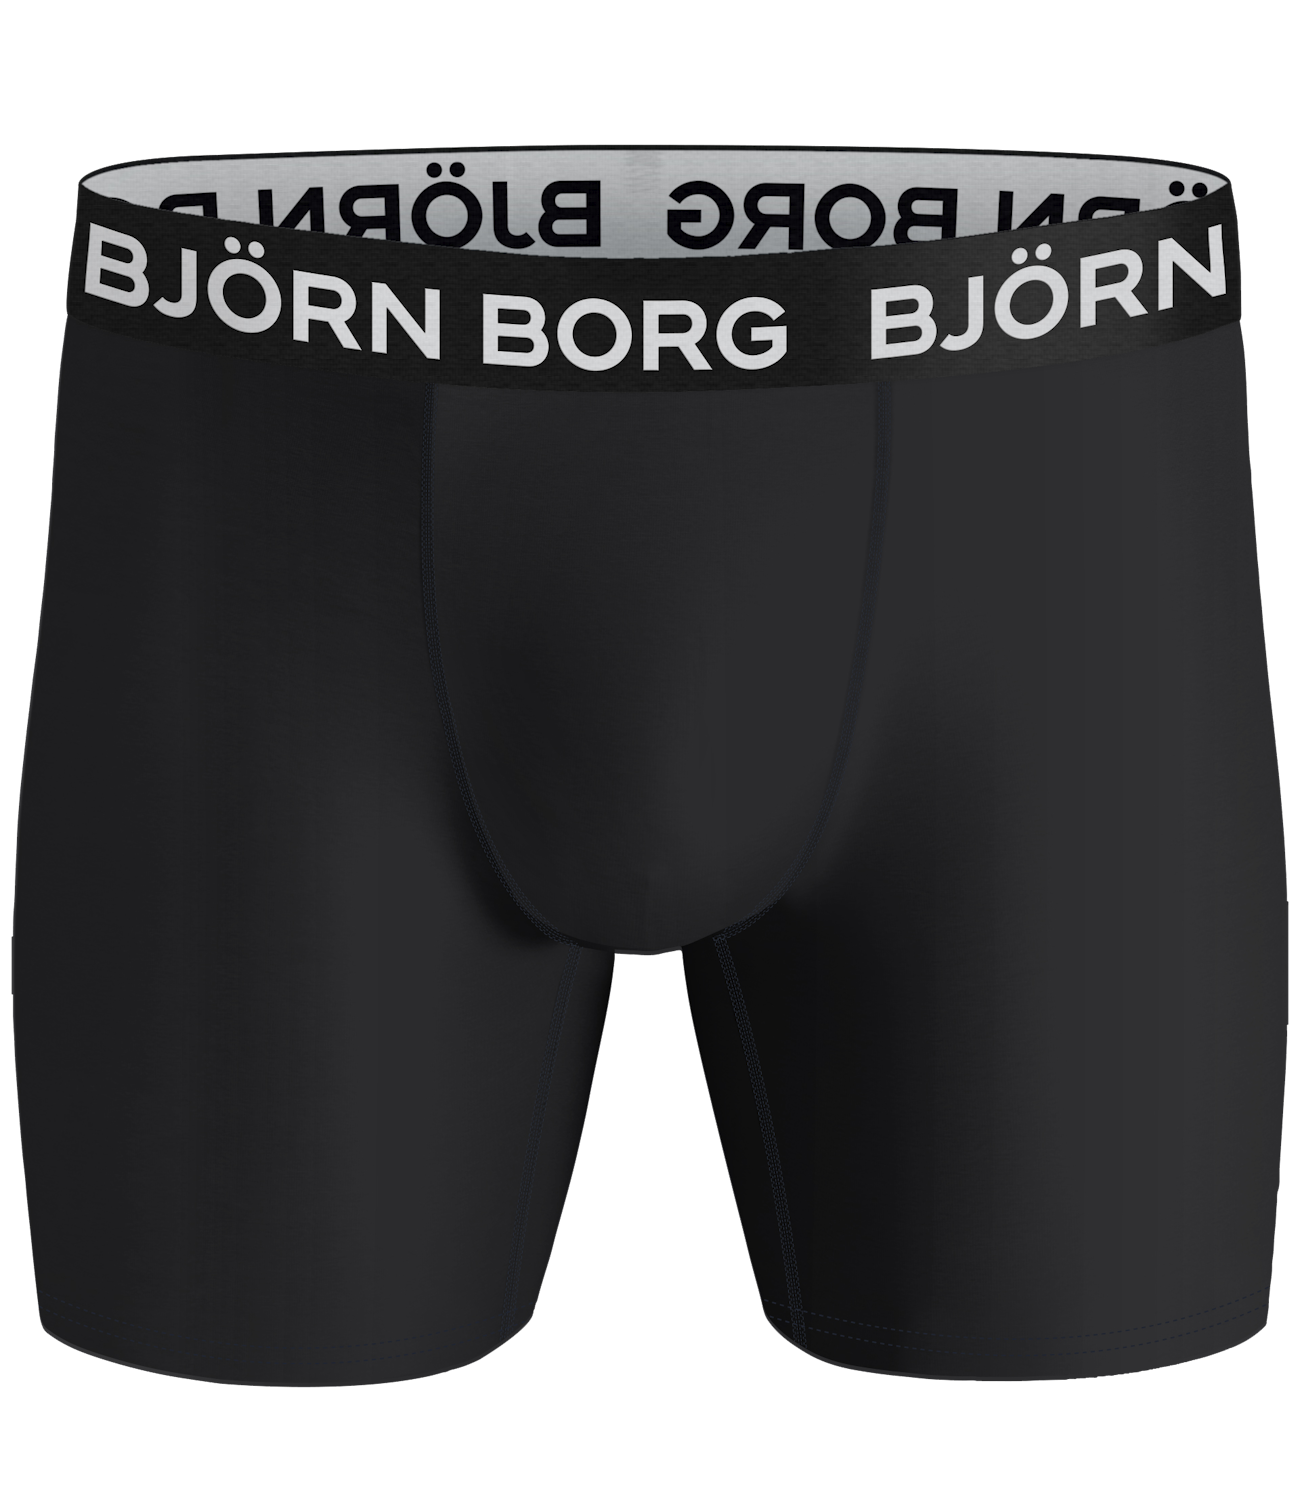 Bikkembergs Underwear Men + Bjorn Borg Sport's Bra - Germany, New